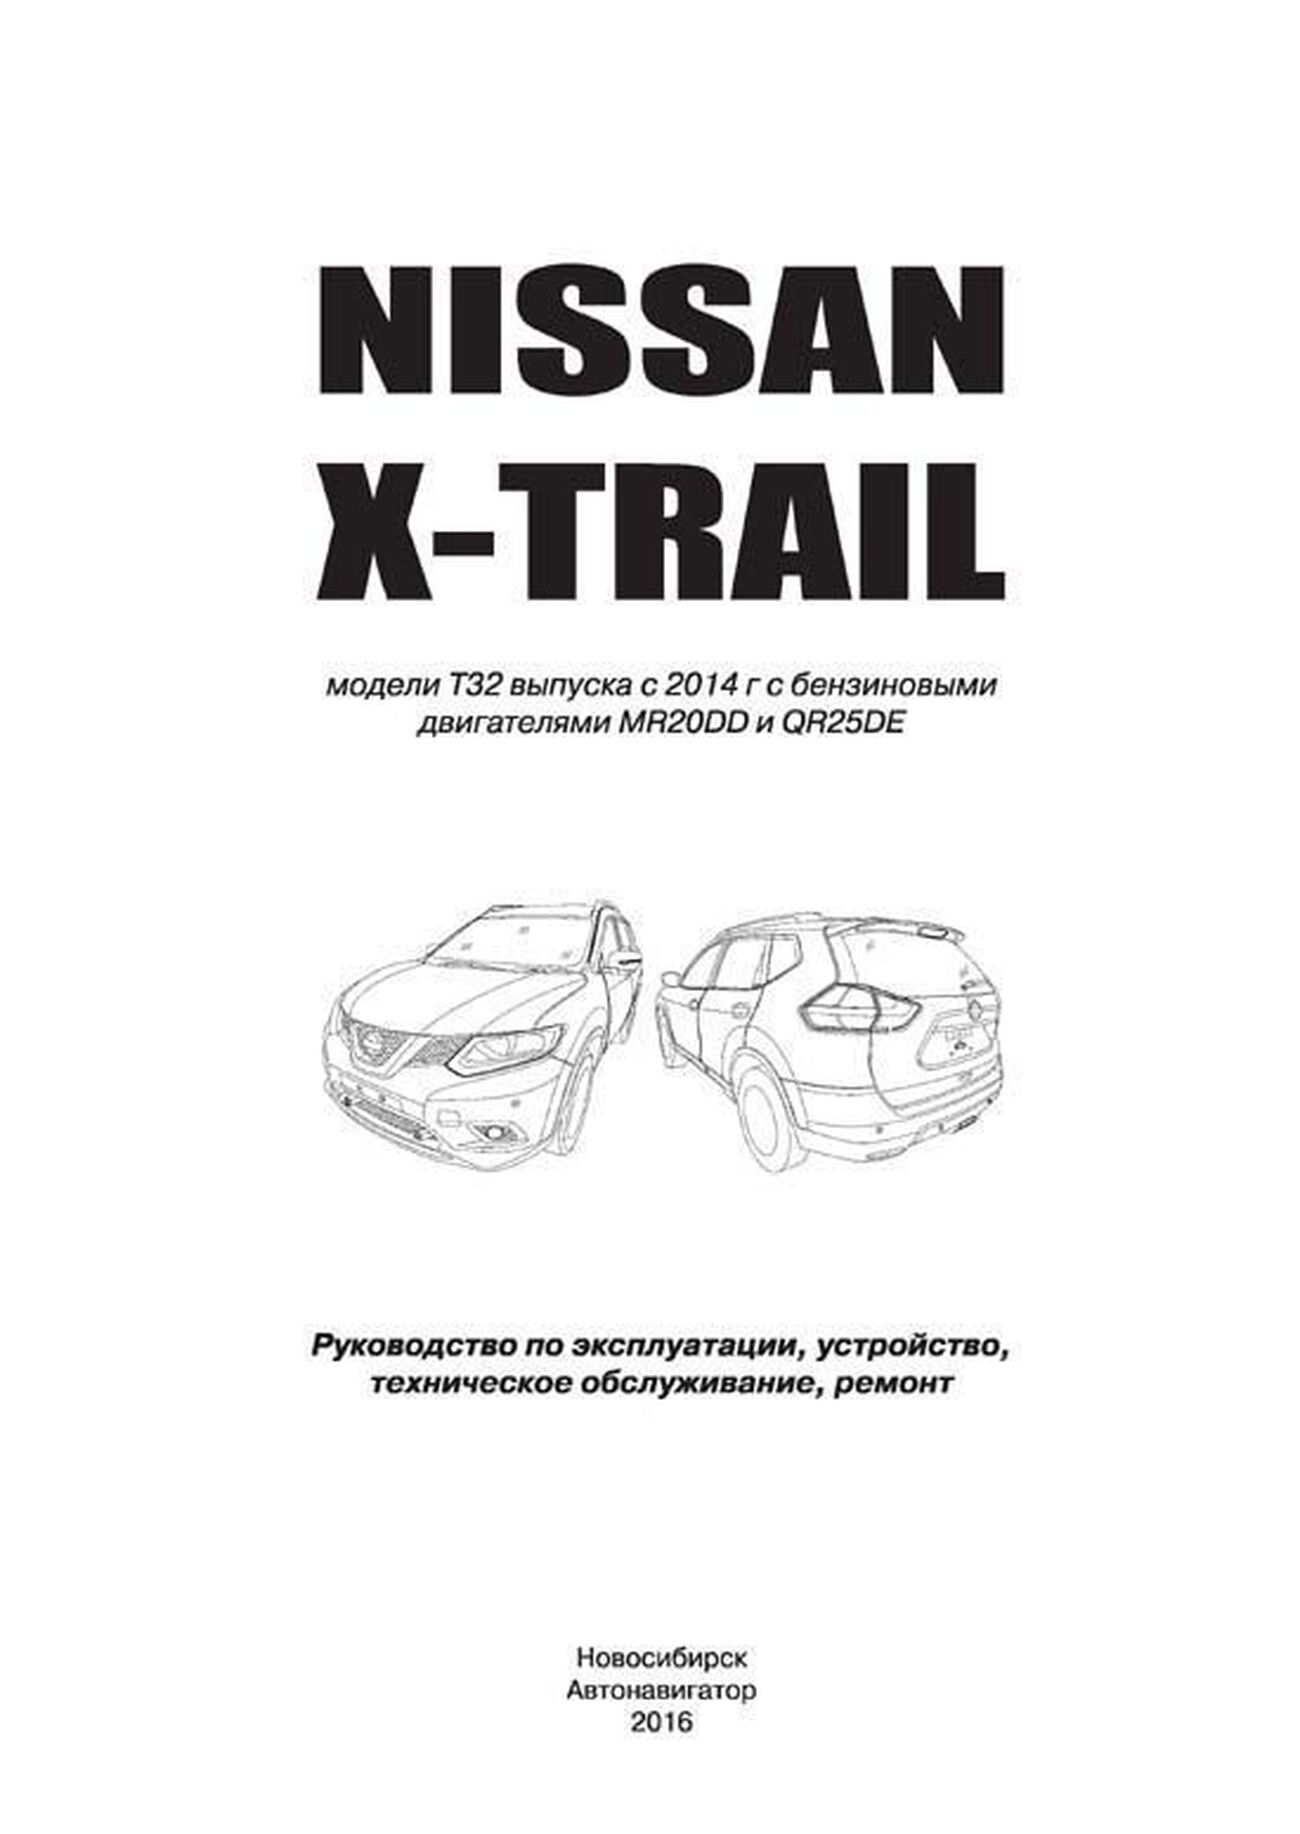 Книга: NISSAN X-TRAIL (T32) (б) с 2014 г.в. рем., экспл., то, сер.ПРОФ. | Автонавигатор